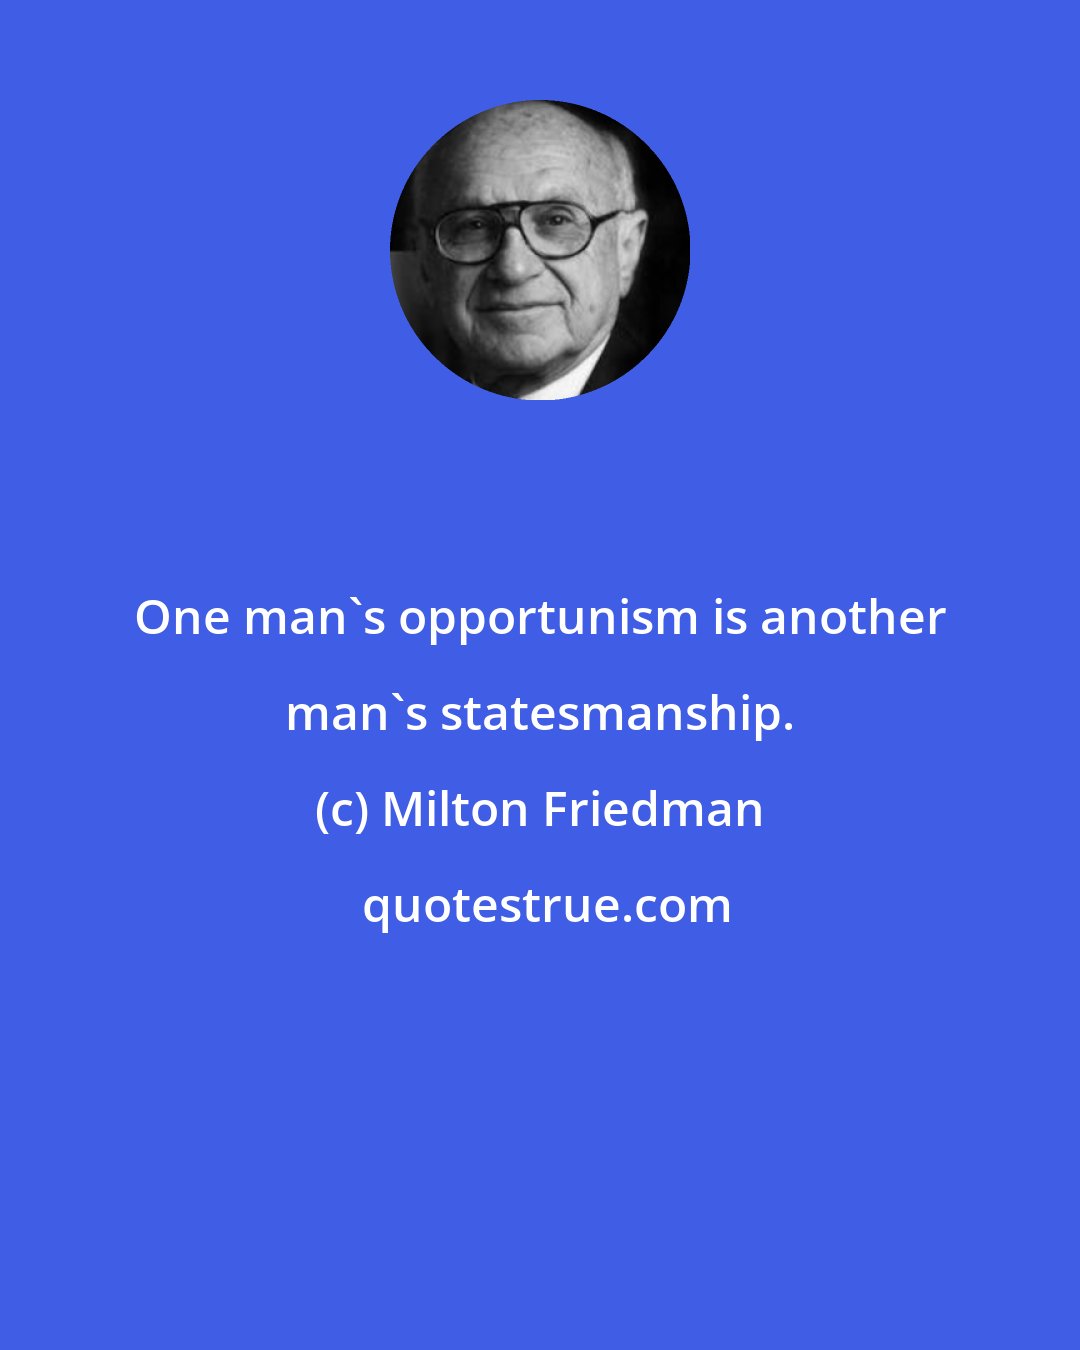 Milton Friedman: One man's opportunism is another man's statesmanship.